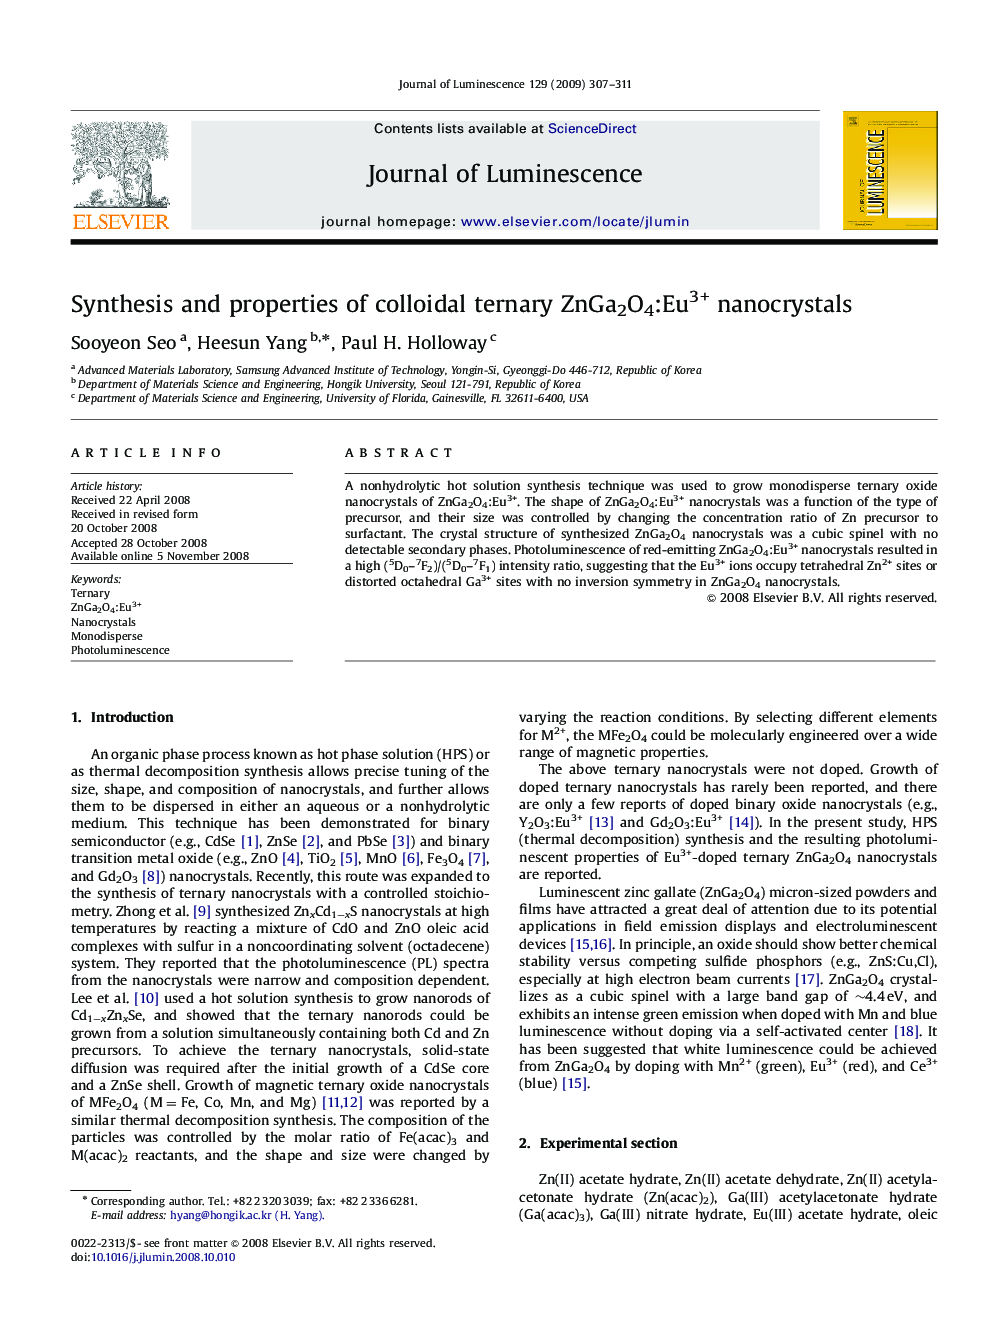 Synthesis and properties of colloidal ternary ZnGa2O4:Eu3+ nanocrystals